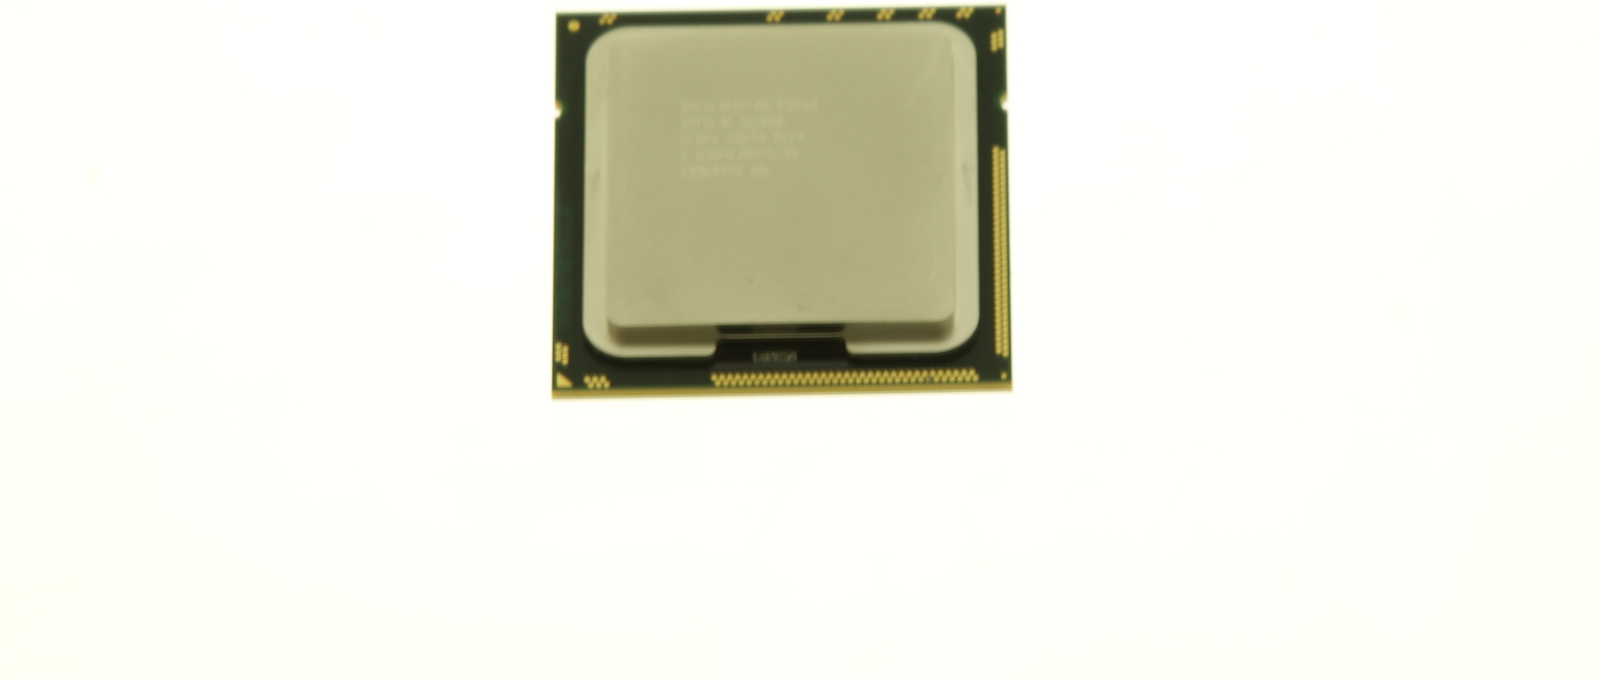 Processor-Intel-E5540 Nehelem EP 2.53 Ghz, 8M, 80W- 490071-001-New